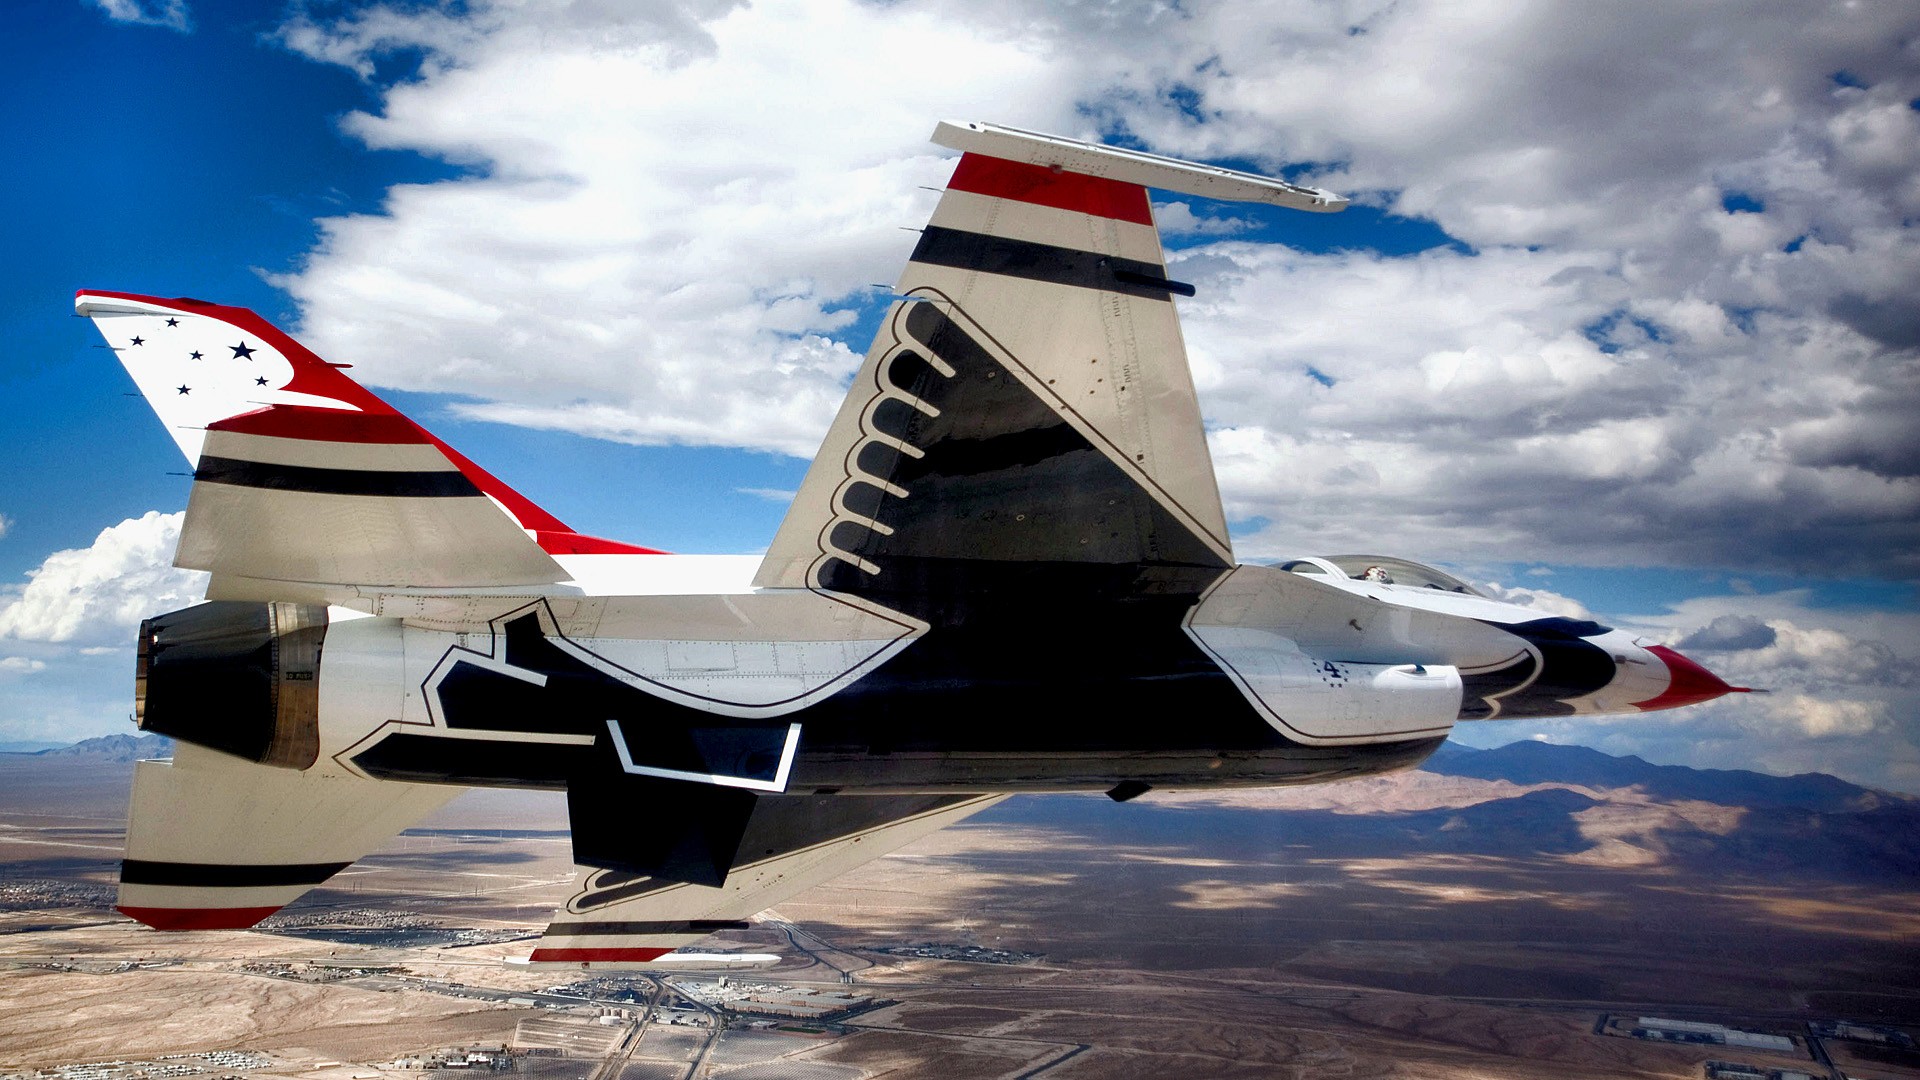 thunderbird wallpaper,airplane,aircraft,aviation,air force,vehicle